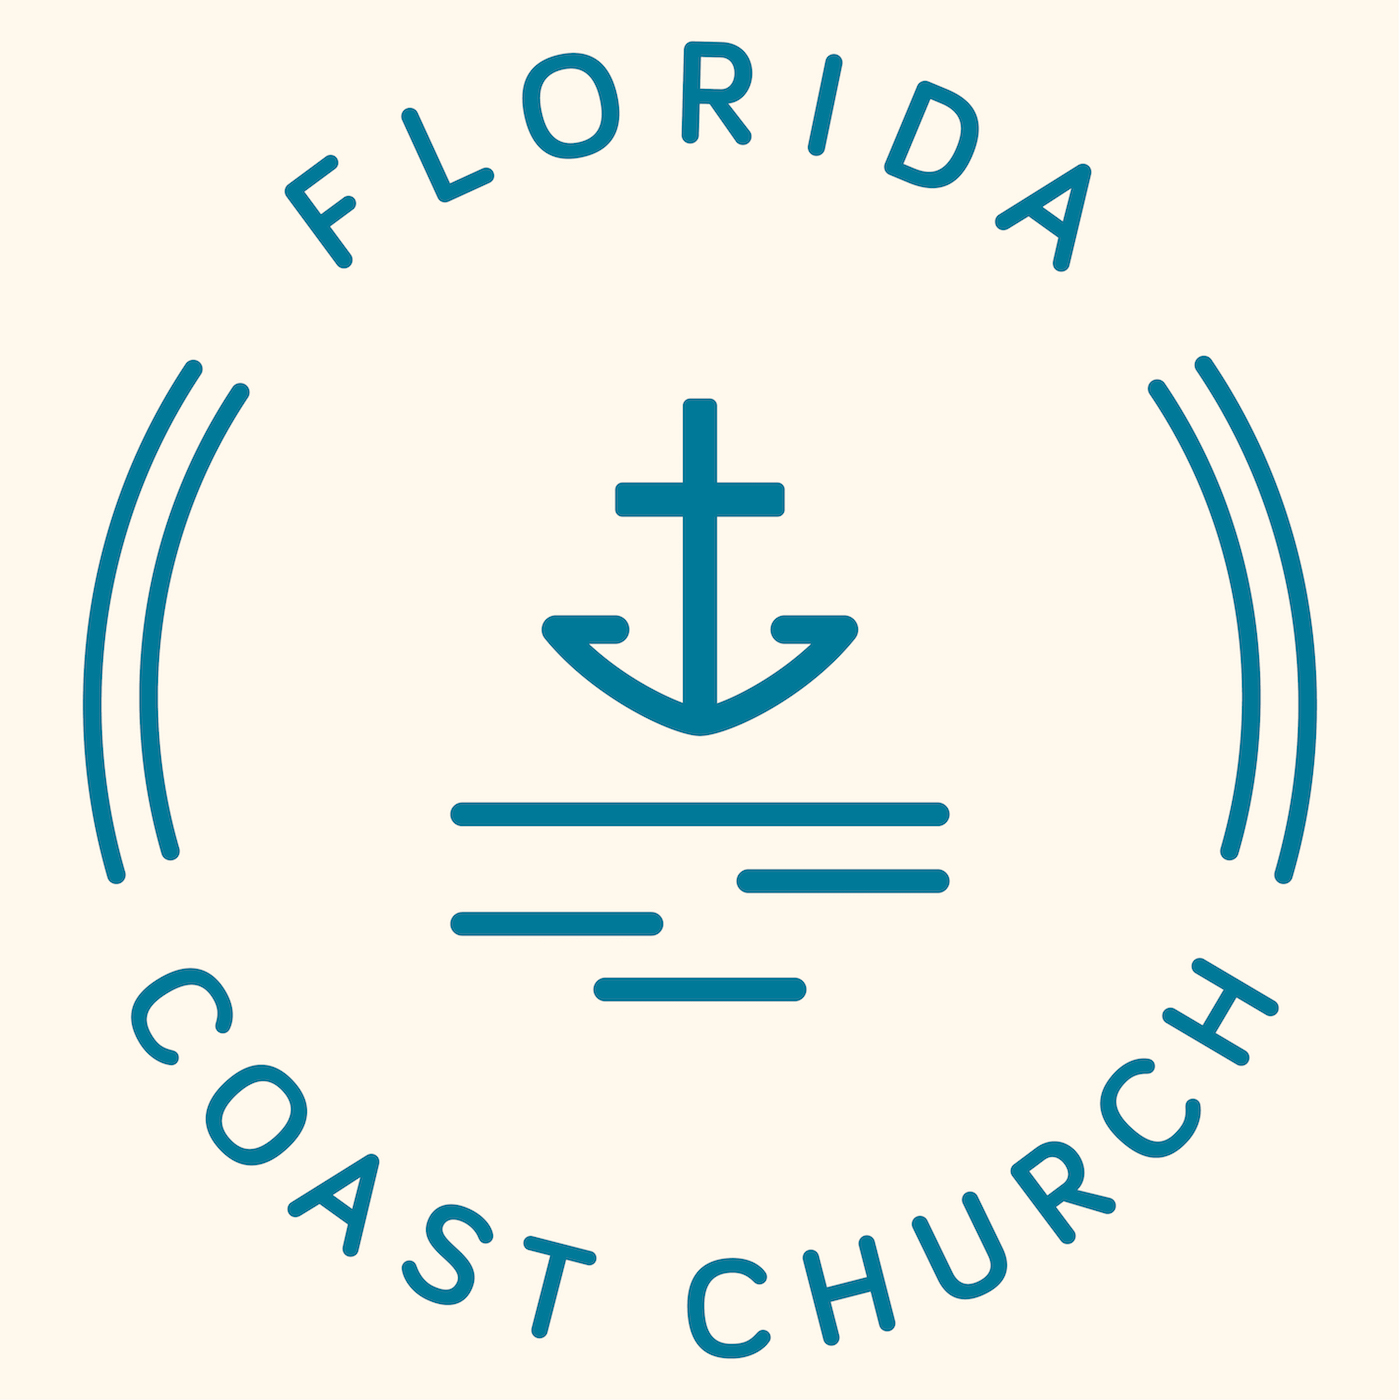 Florida Coast Church